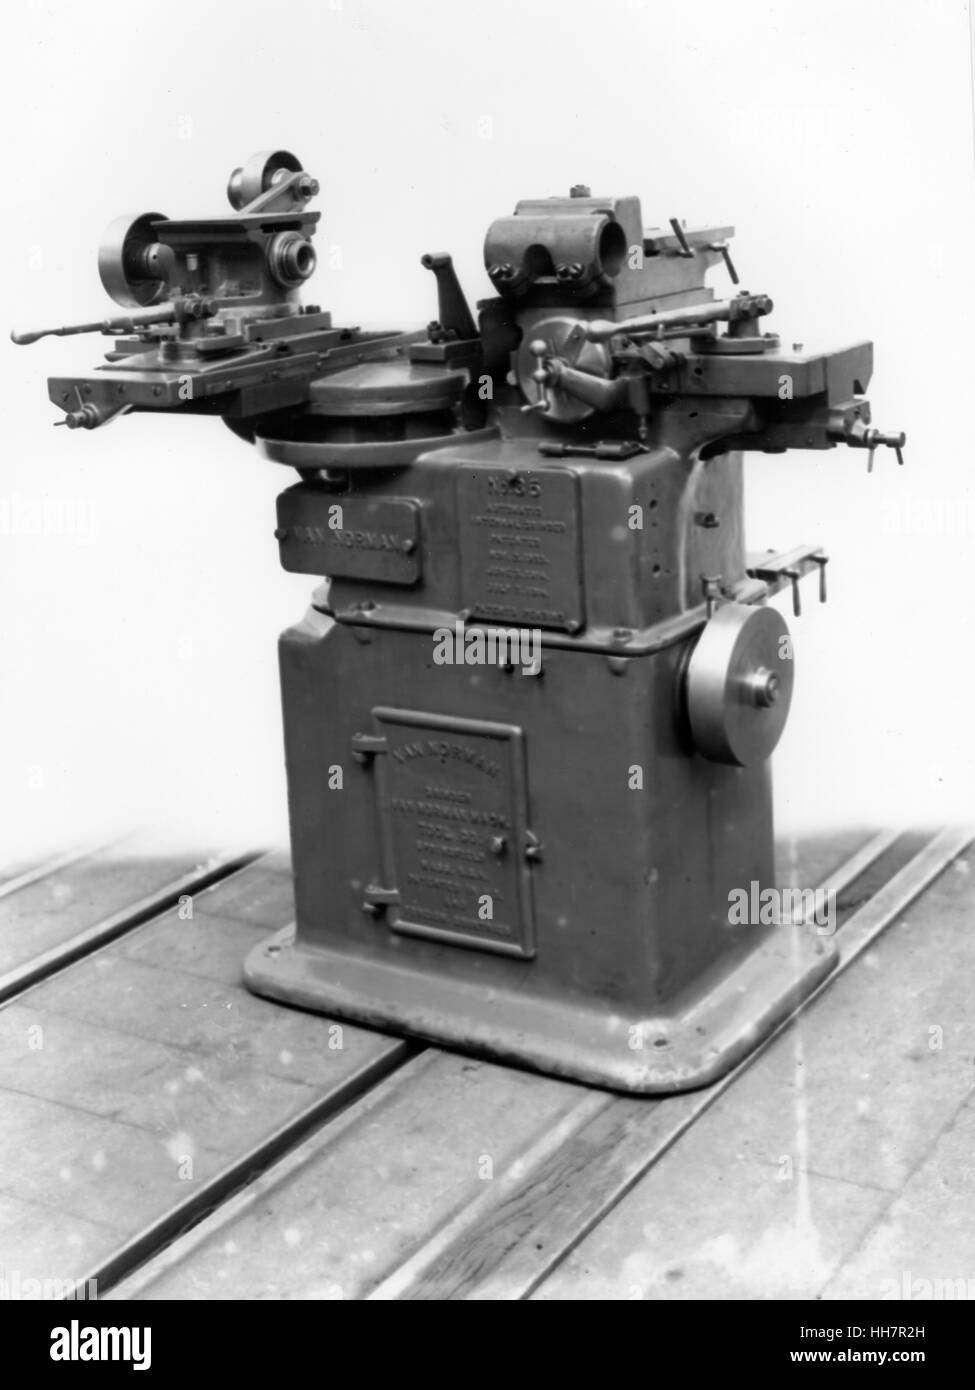 1930 - 40. Fiat - Ansaldo machine. Motors components. Stock Photo